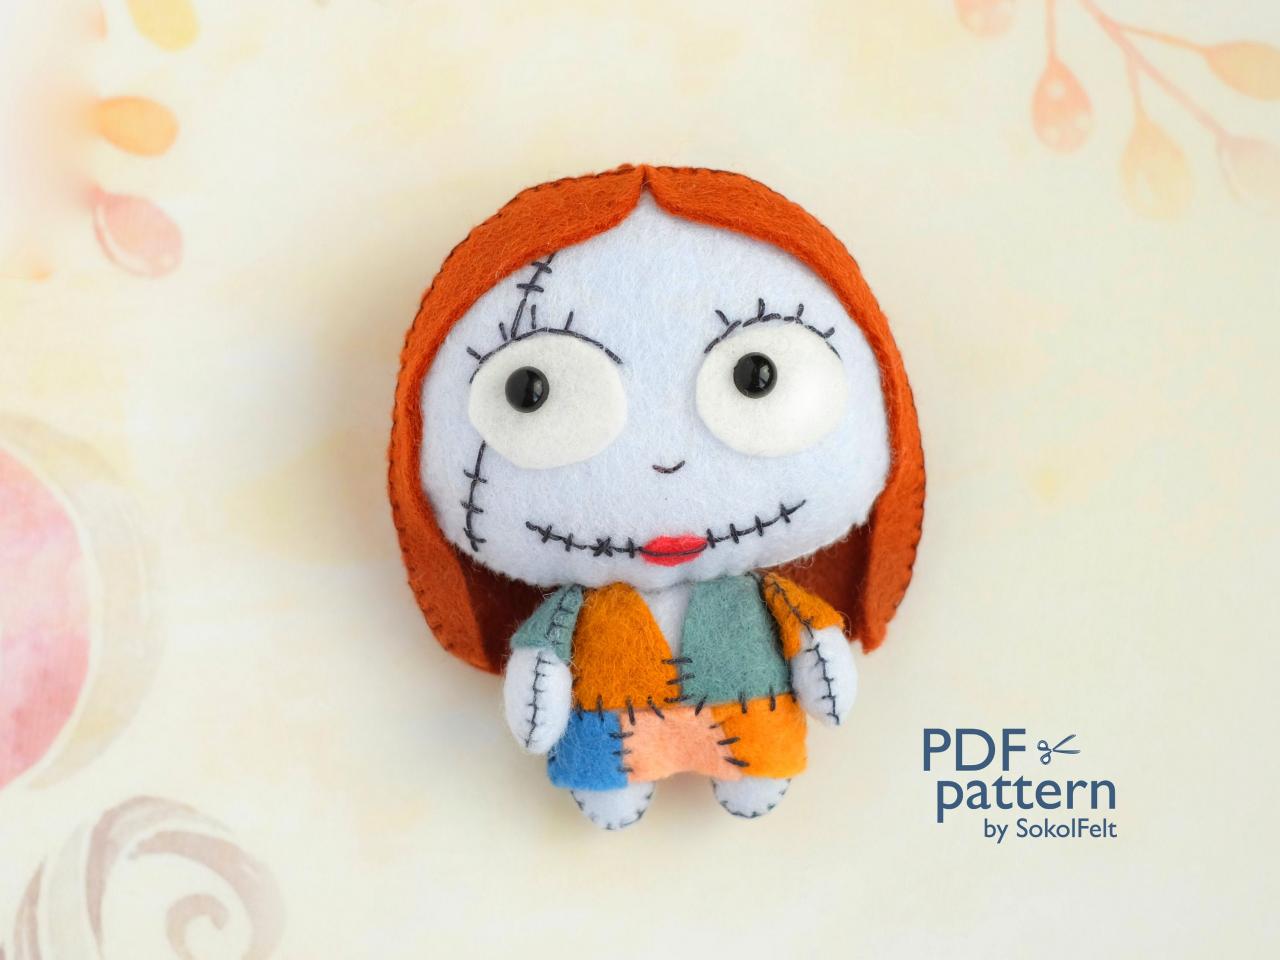 Felt Sally PDF pattern, Nightmare before Christmas, Easy to make Halloween toy, Halloween ornament